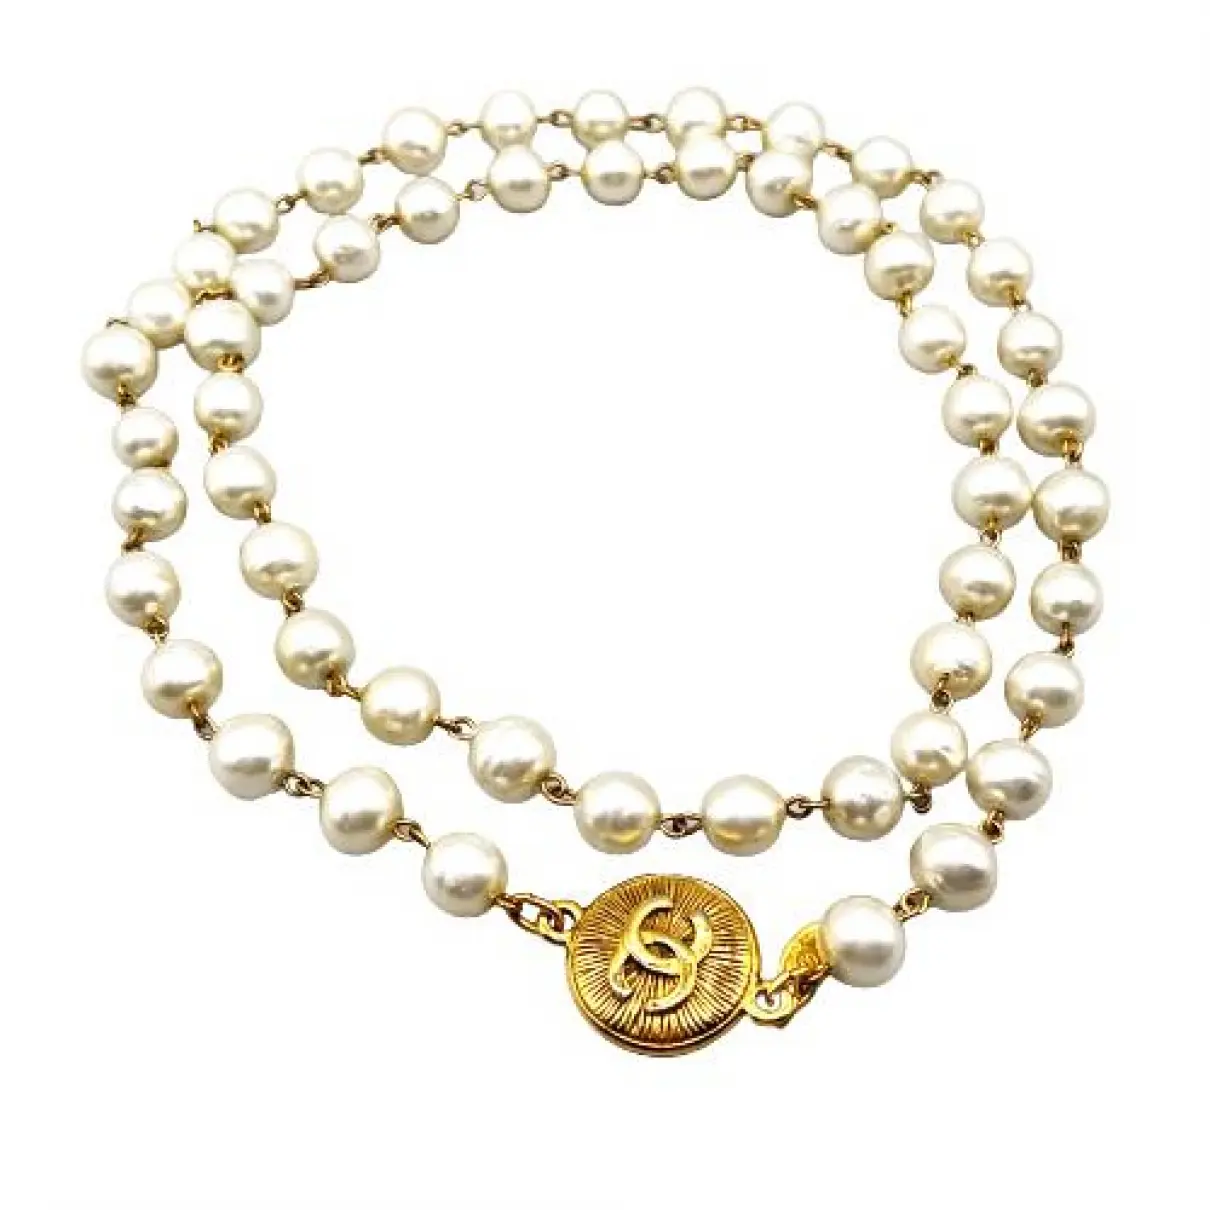 Buy Chanel Necklace online - Vintage